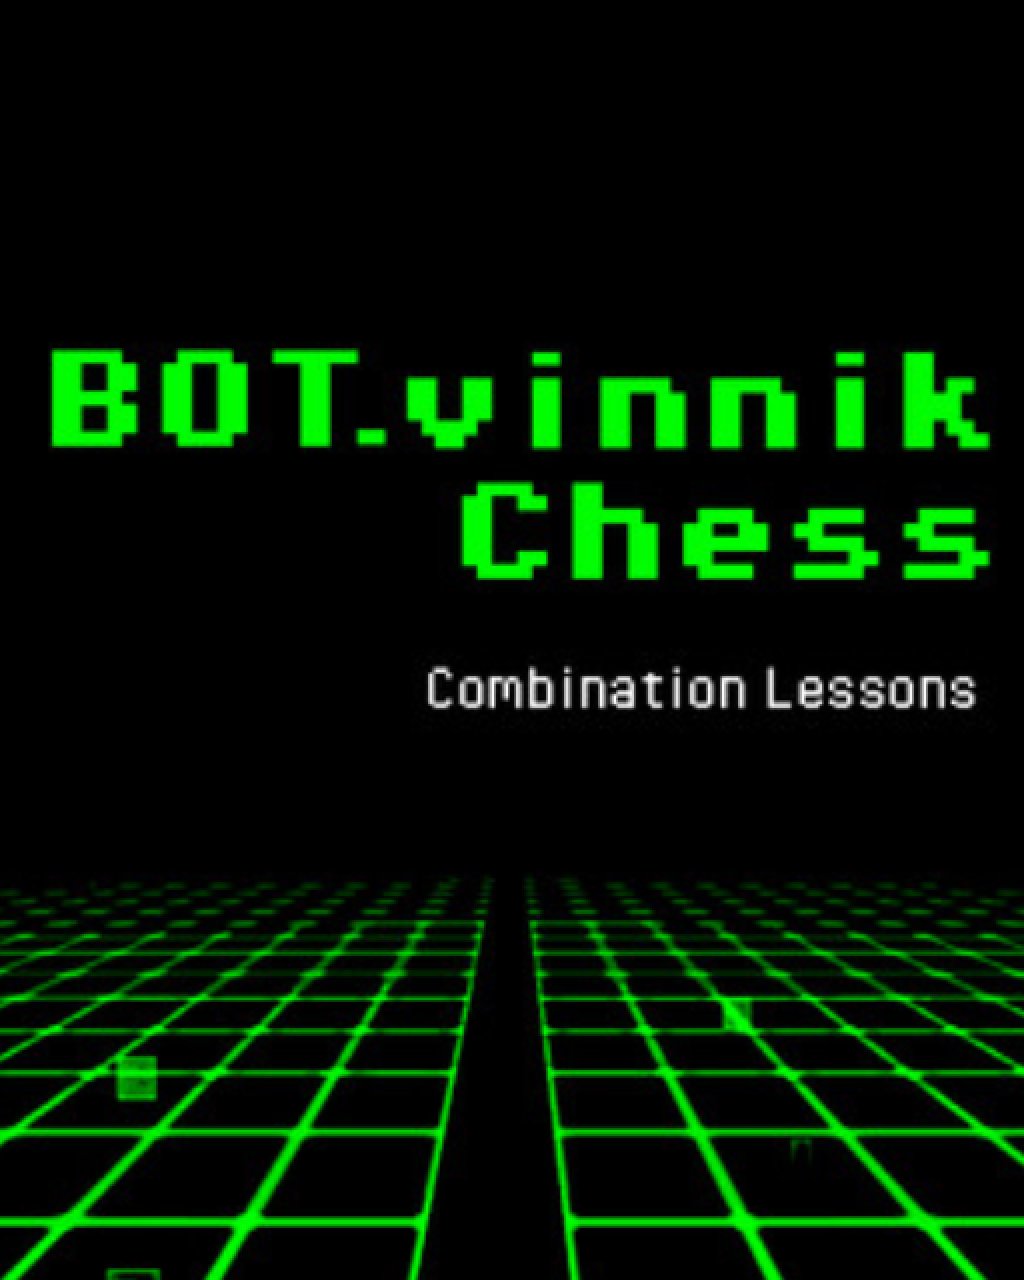 ESD BOT.vinnik Chess Combination Lessons